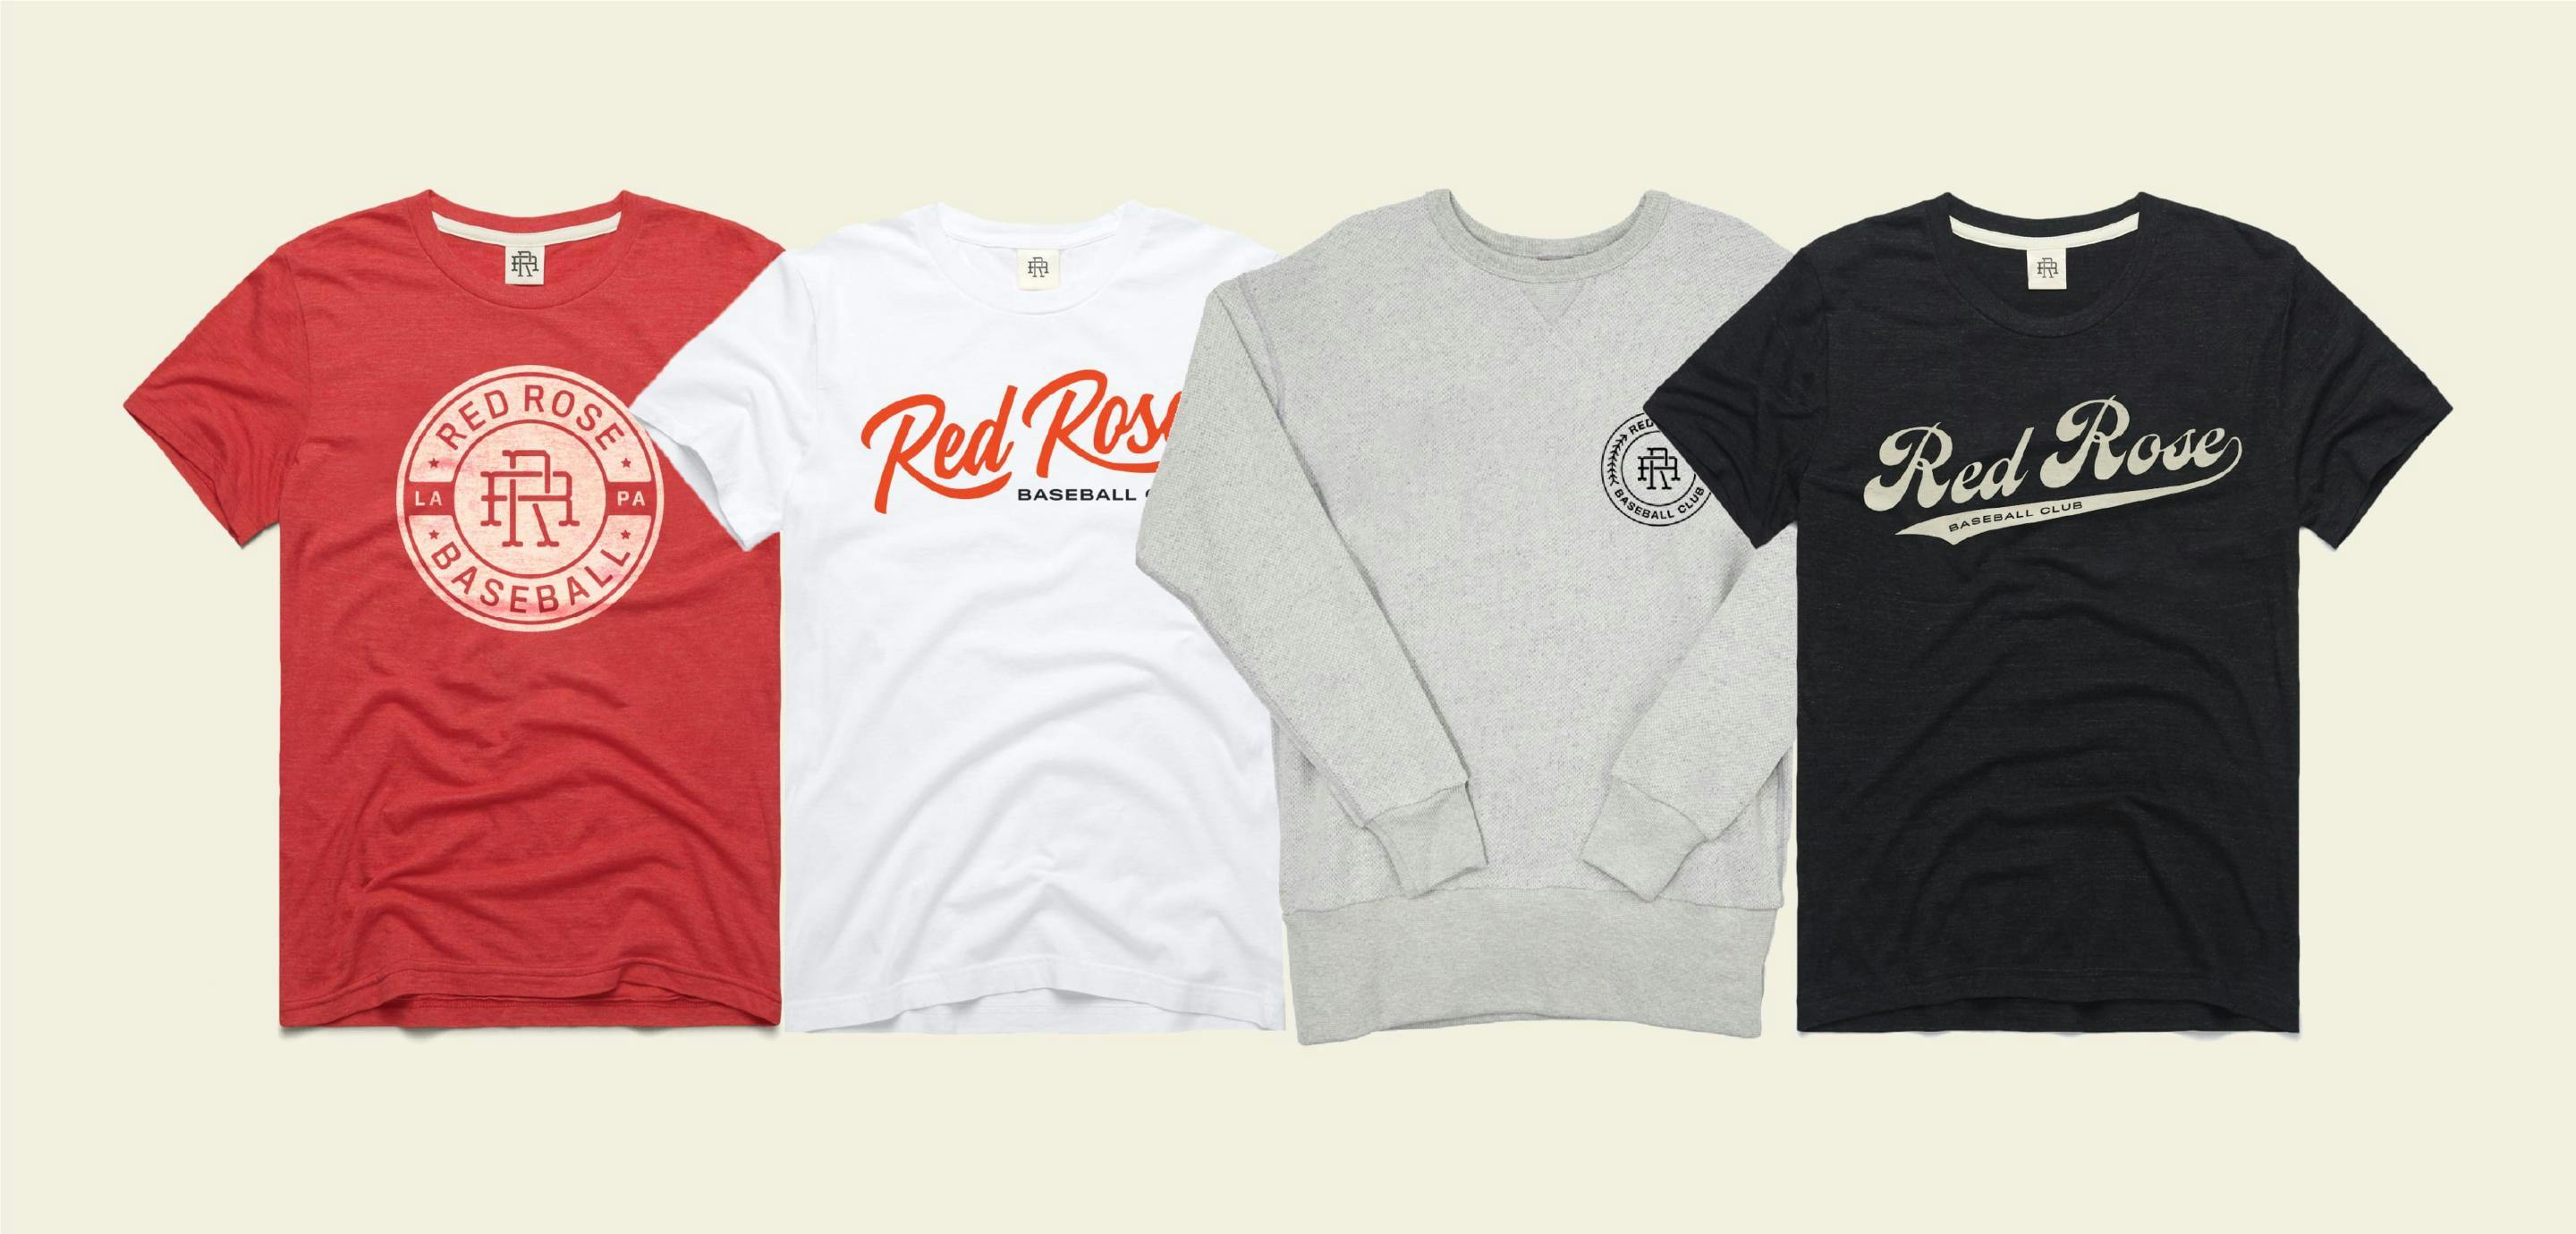 Red Rose Baseball Club shirts